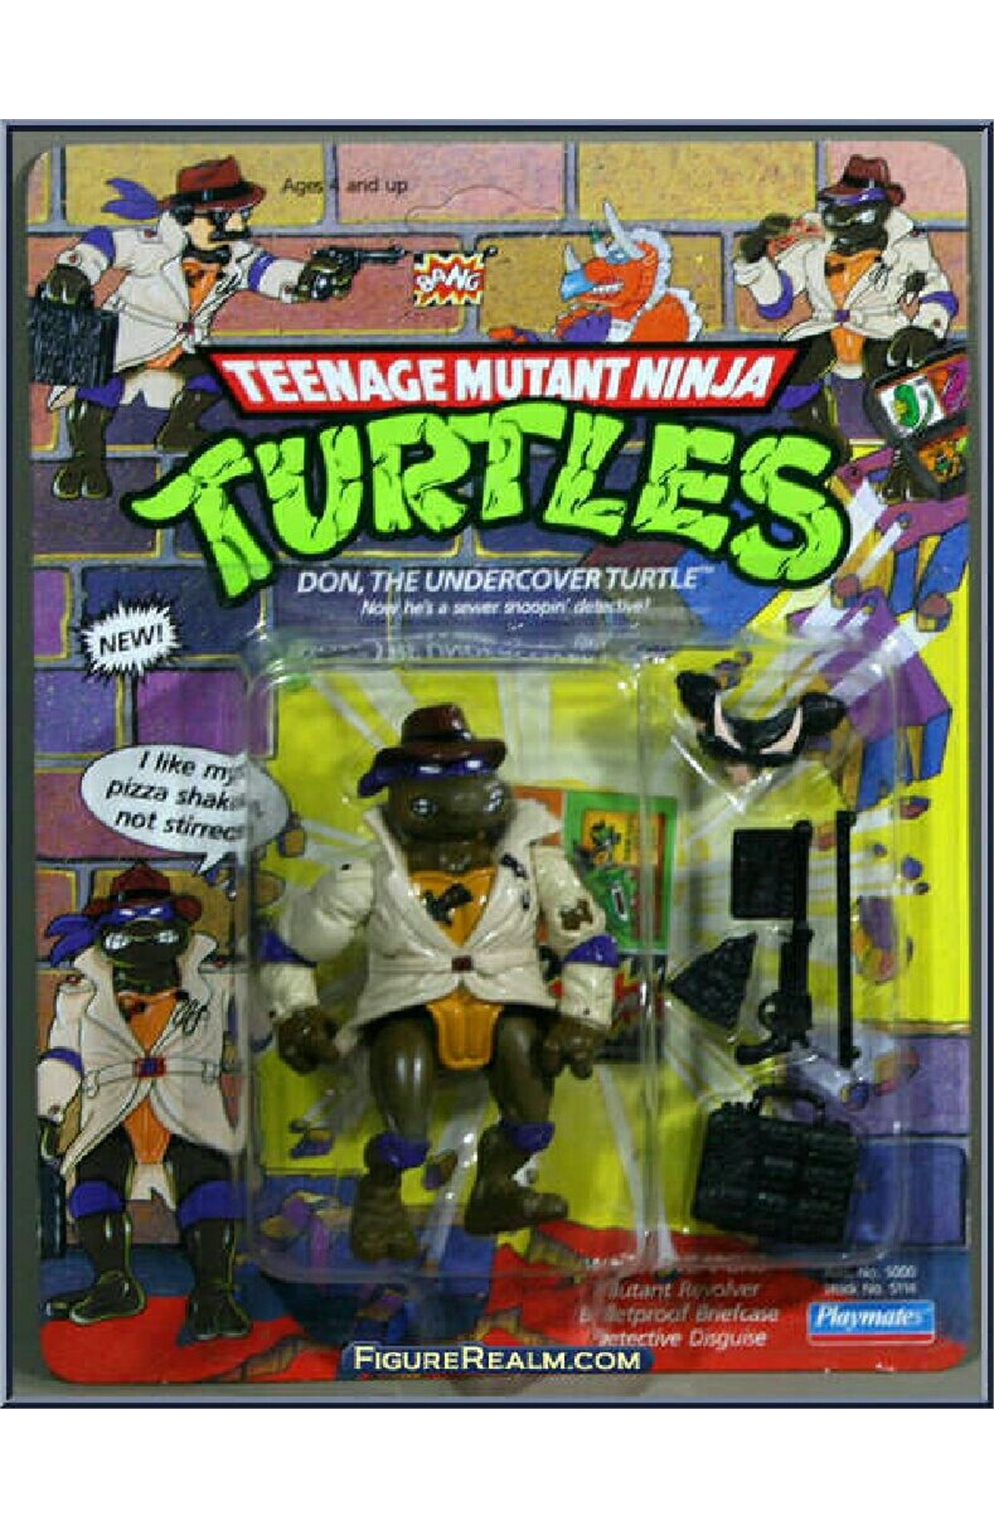 Playmates 1990 Teenage Munant Ninja Turtle Don The Undercover Turtle